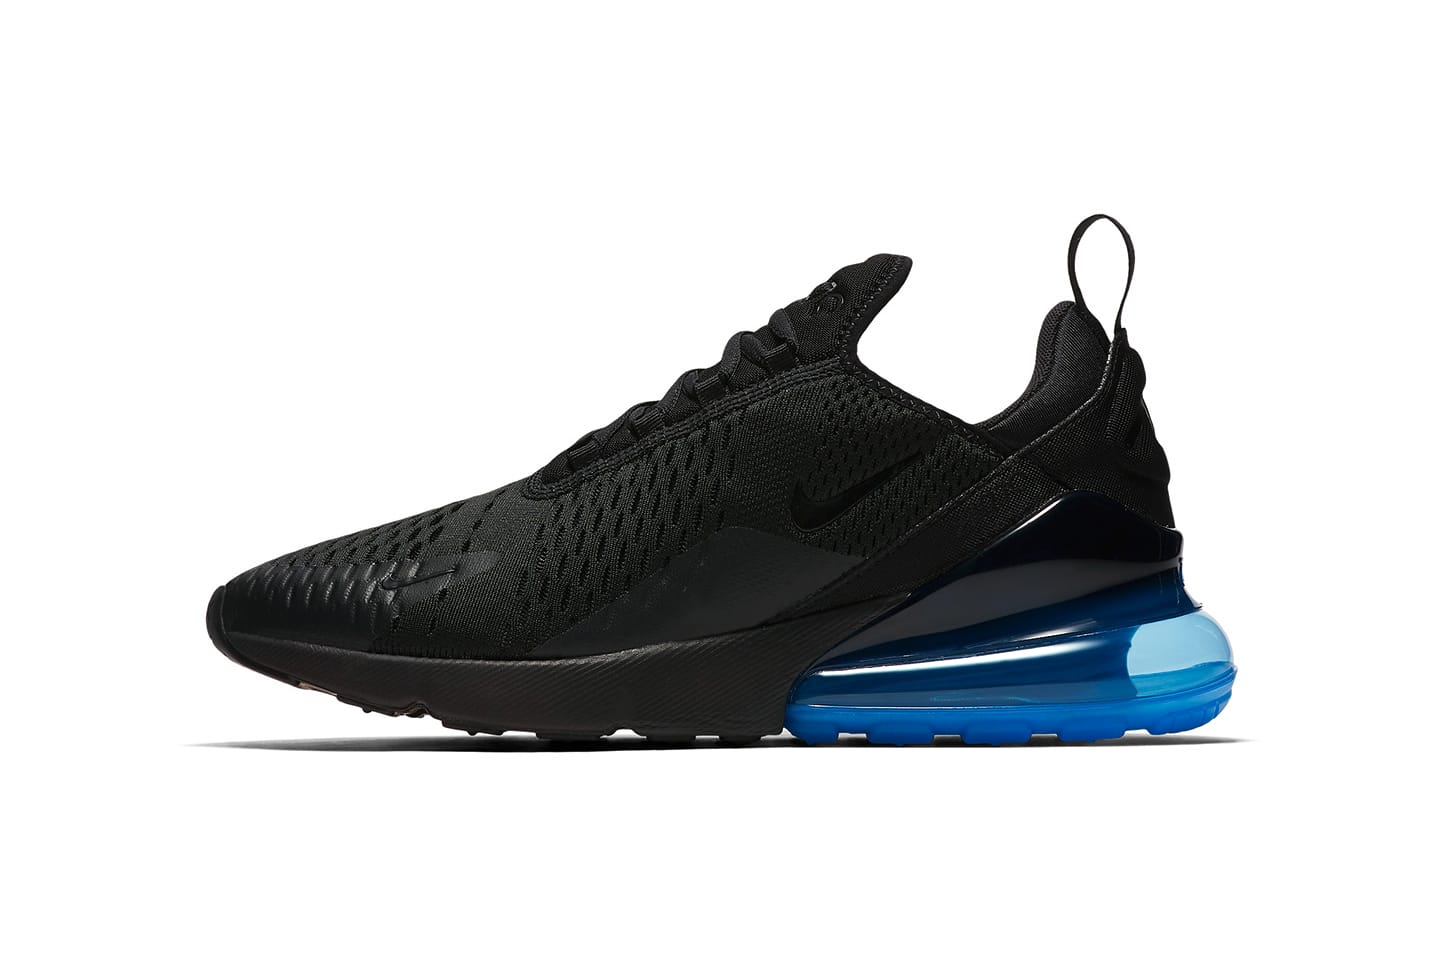 Nike Air Max 270 in Black/Photo Blue | Hypebeast